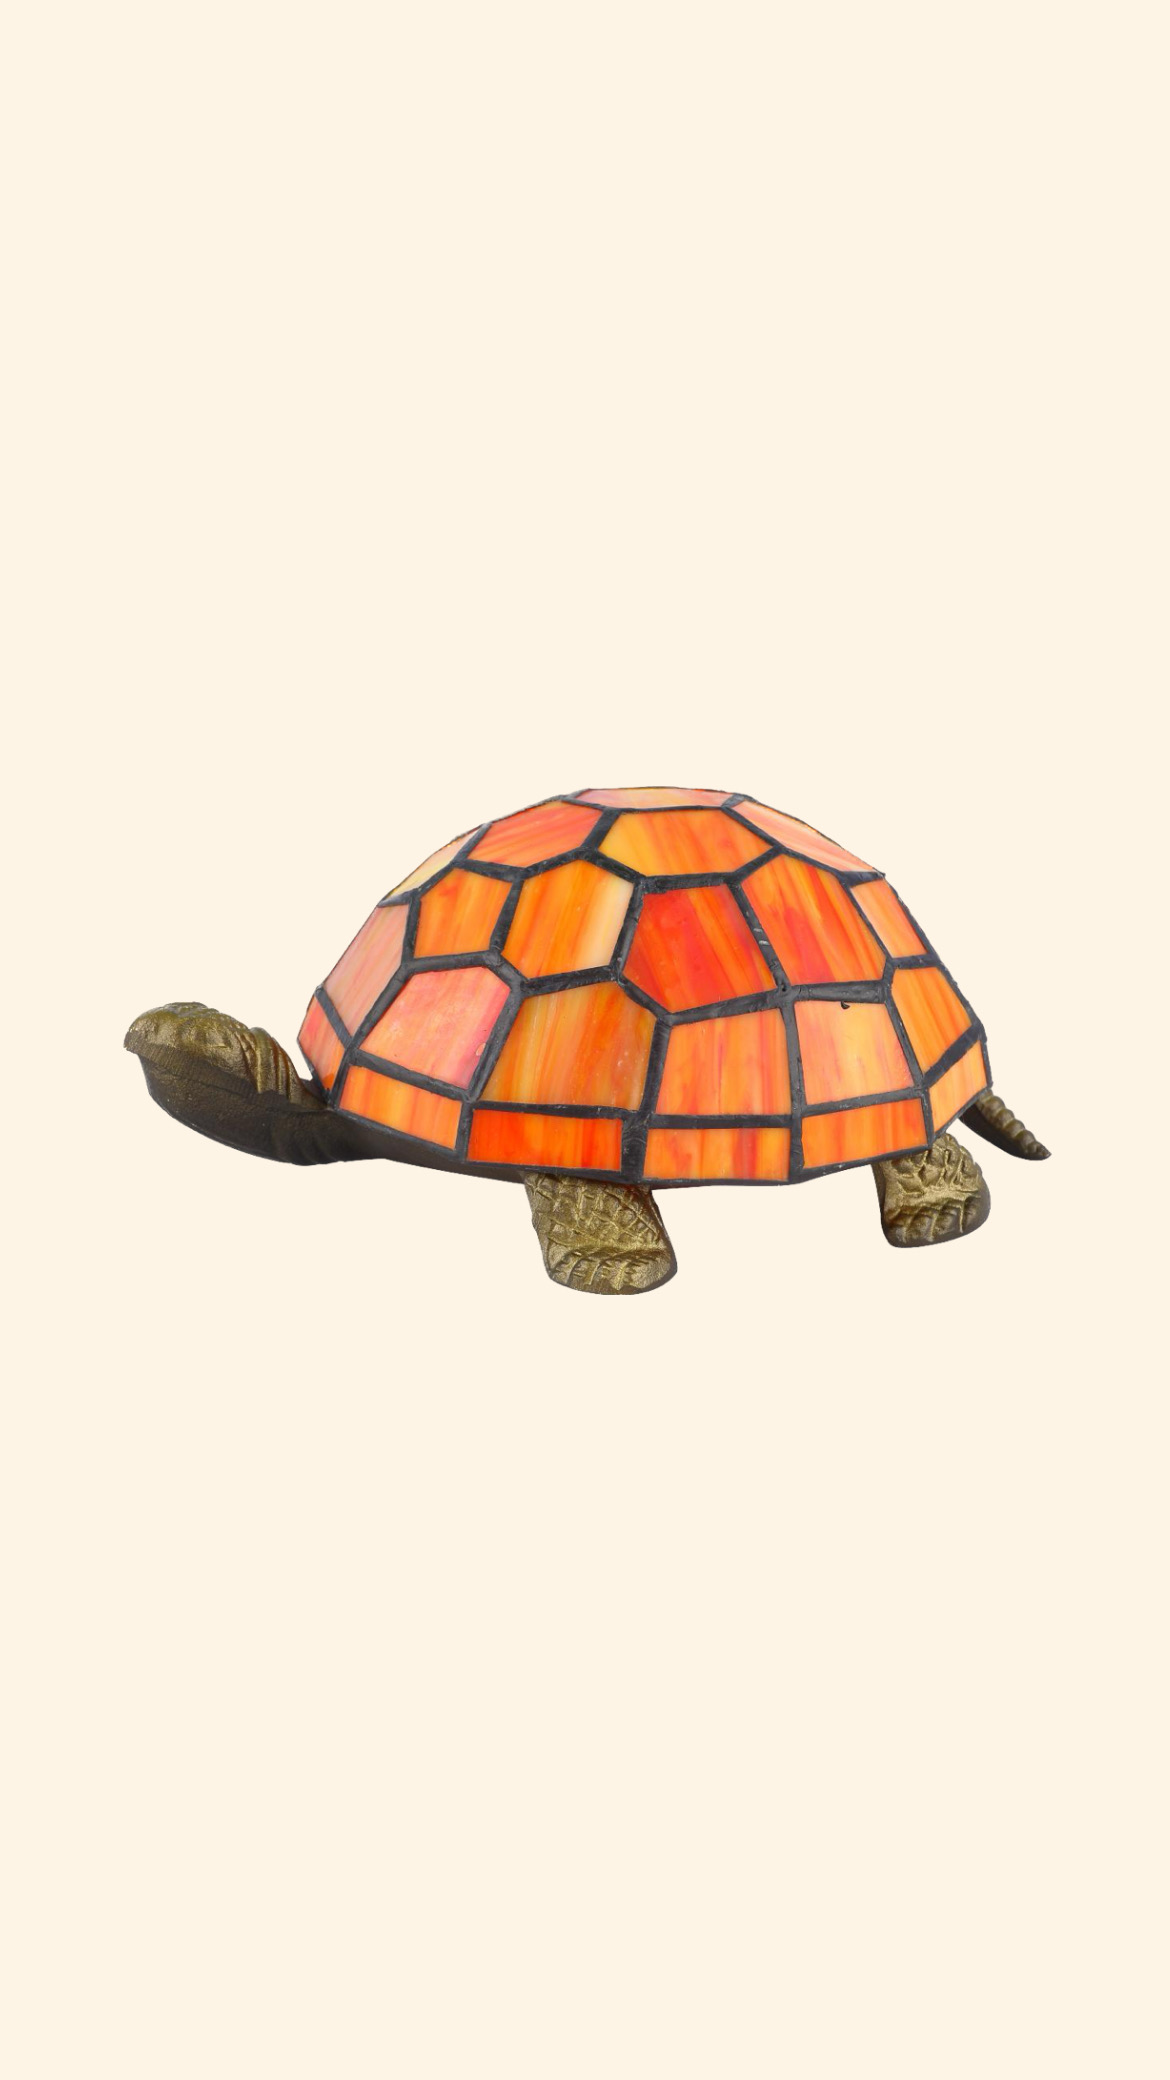 Tiffany Lampa Sköldpadda i röd-gul